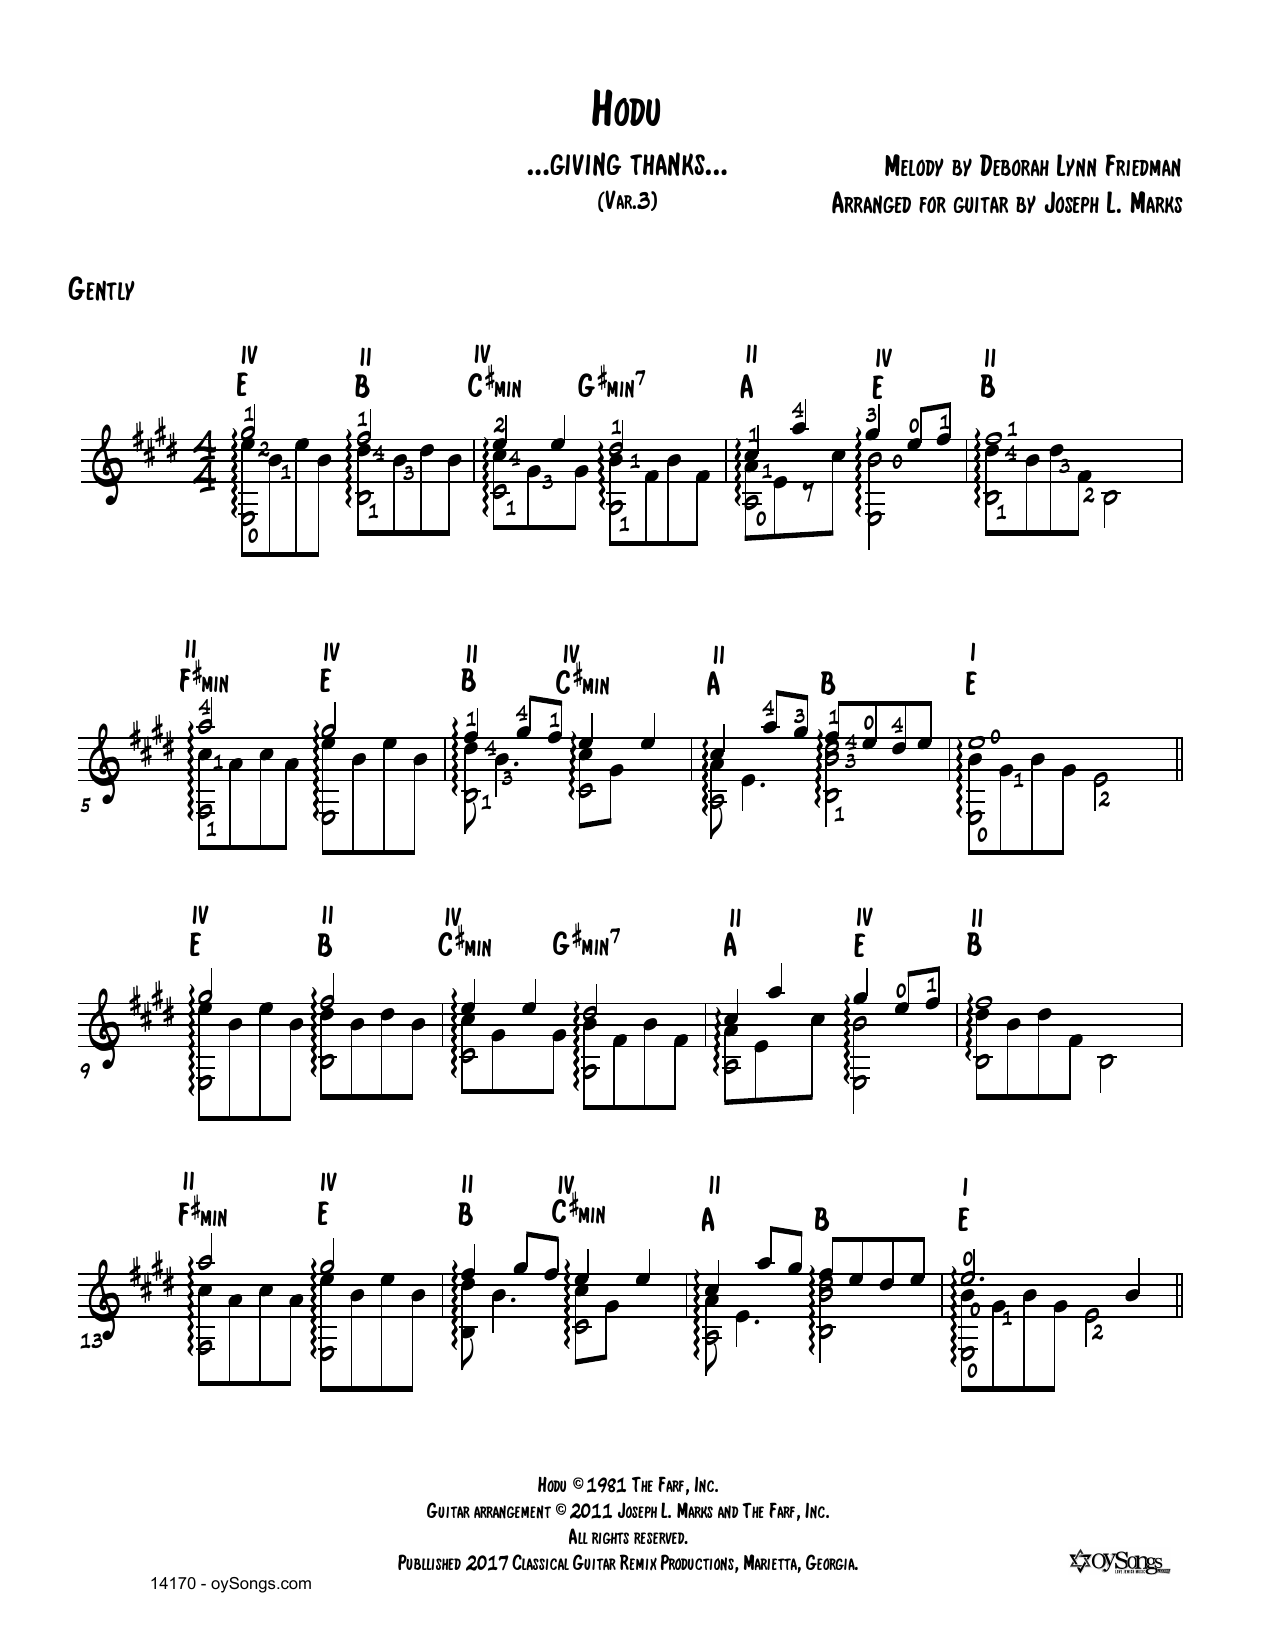 Download Debbie Friedman Hodu Vars 1, 2 (arr. Joe Marks) Sheet Music and learn how to play Solo Guitar PDF digital score in minutes